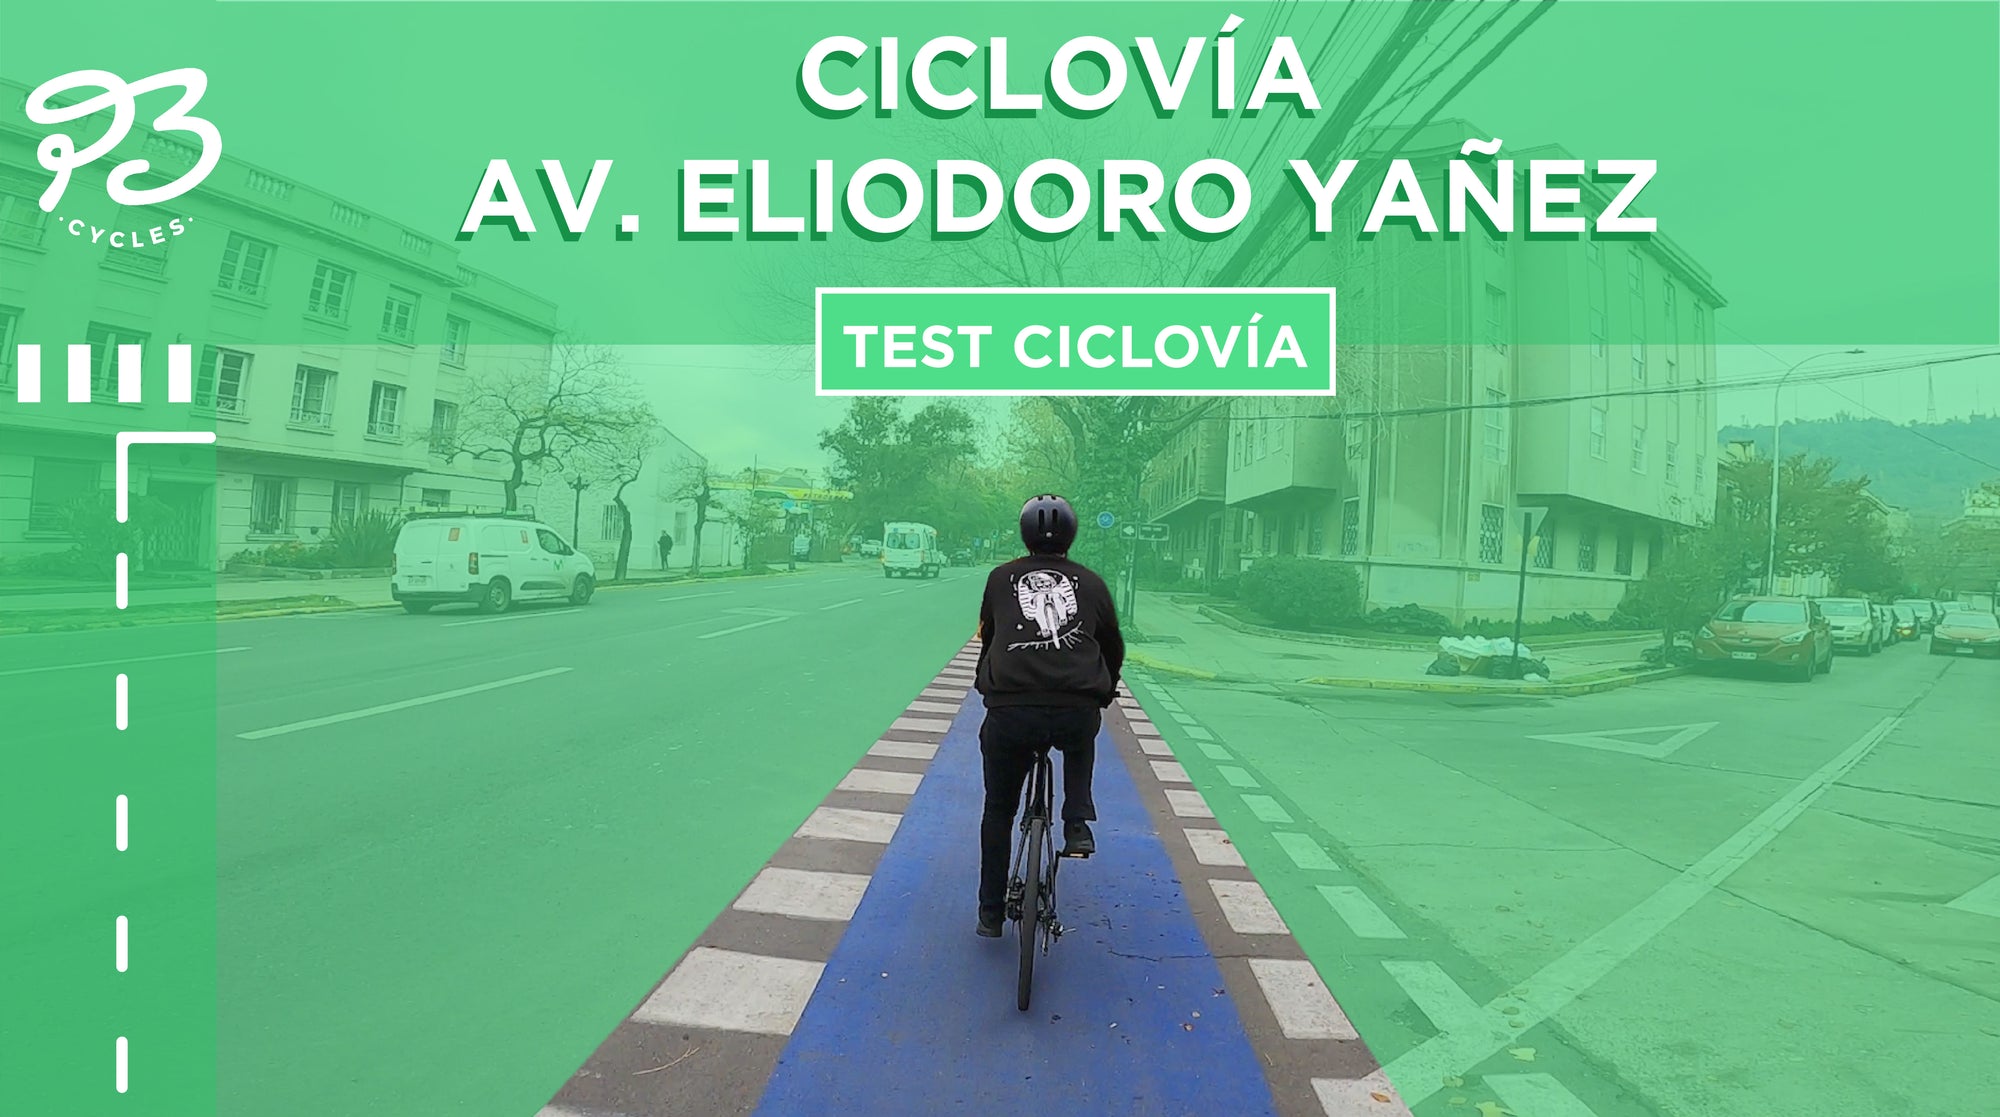 [Video] Test Ciclovía Eliodoro Yañez Santiago de Chile